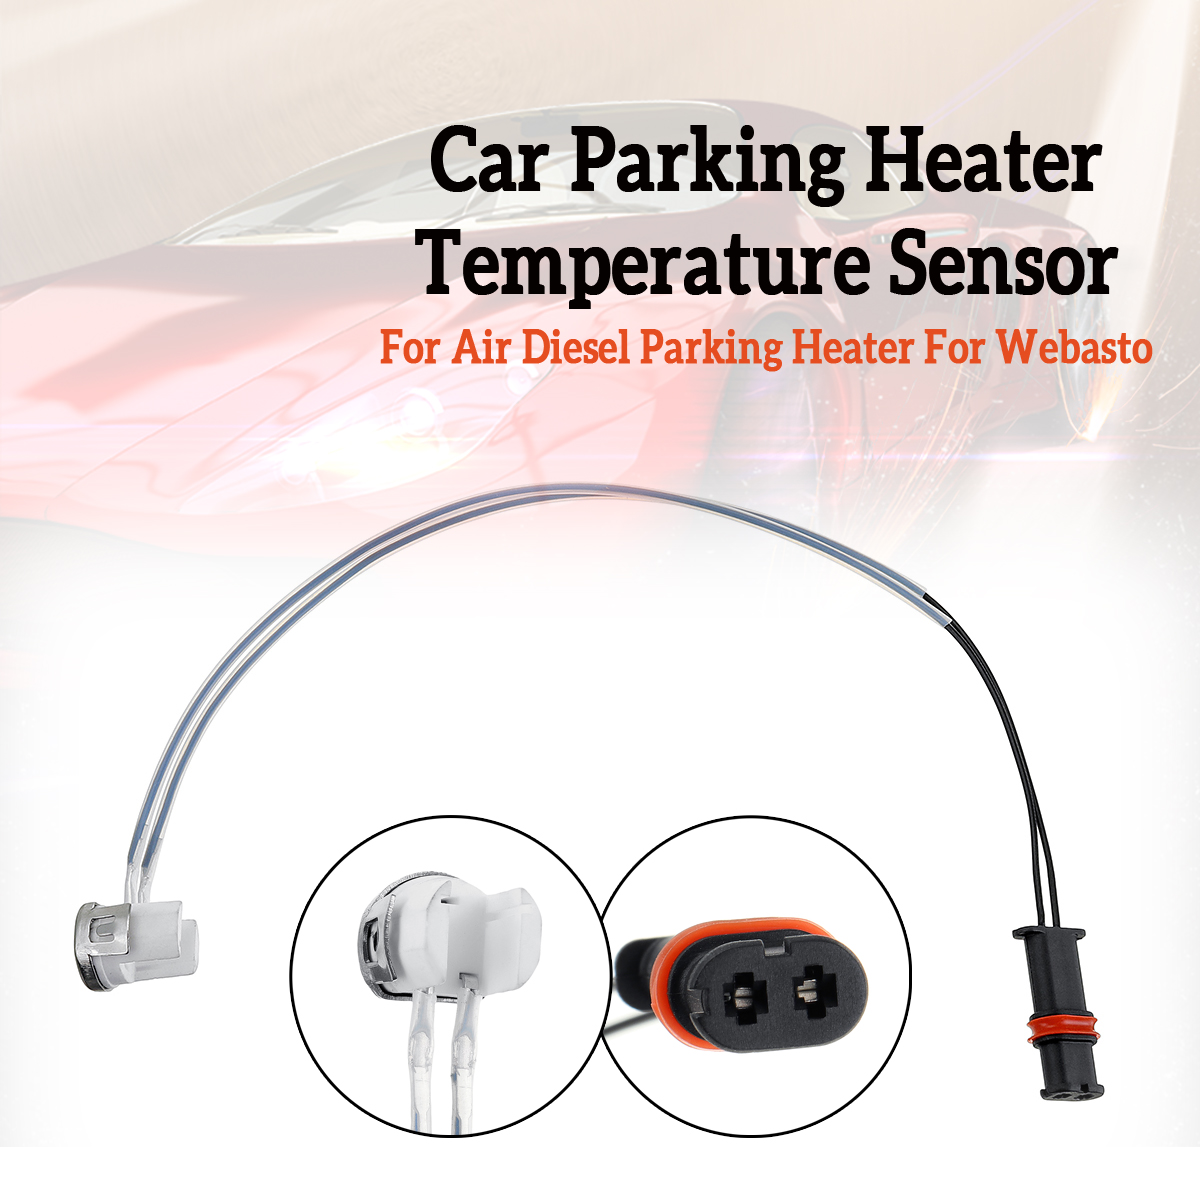 Auto-Temperature-Sensor-For-Air-Diesel-Parking-Heater-for-Webasto-Ebespacher-Air-Diesel-1586171-1